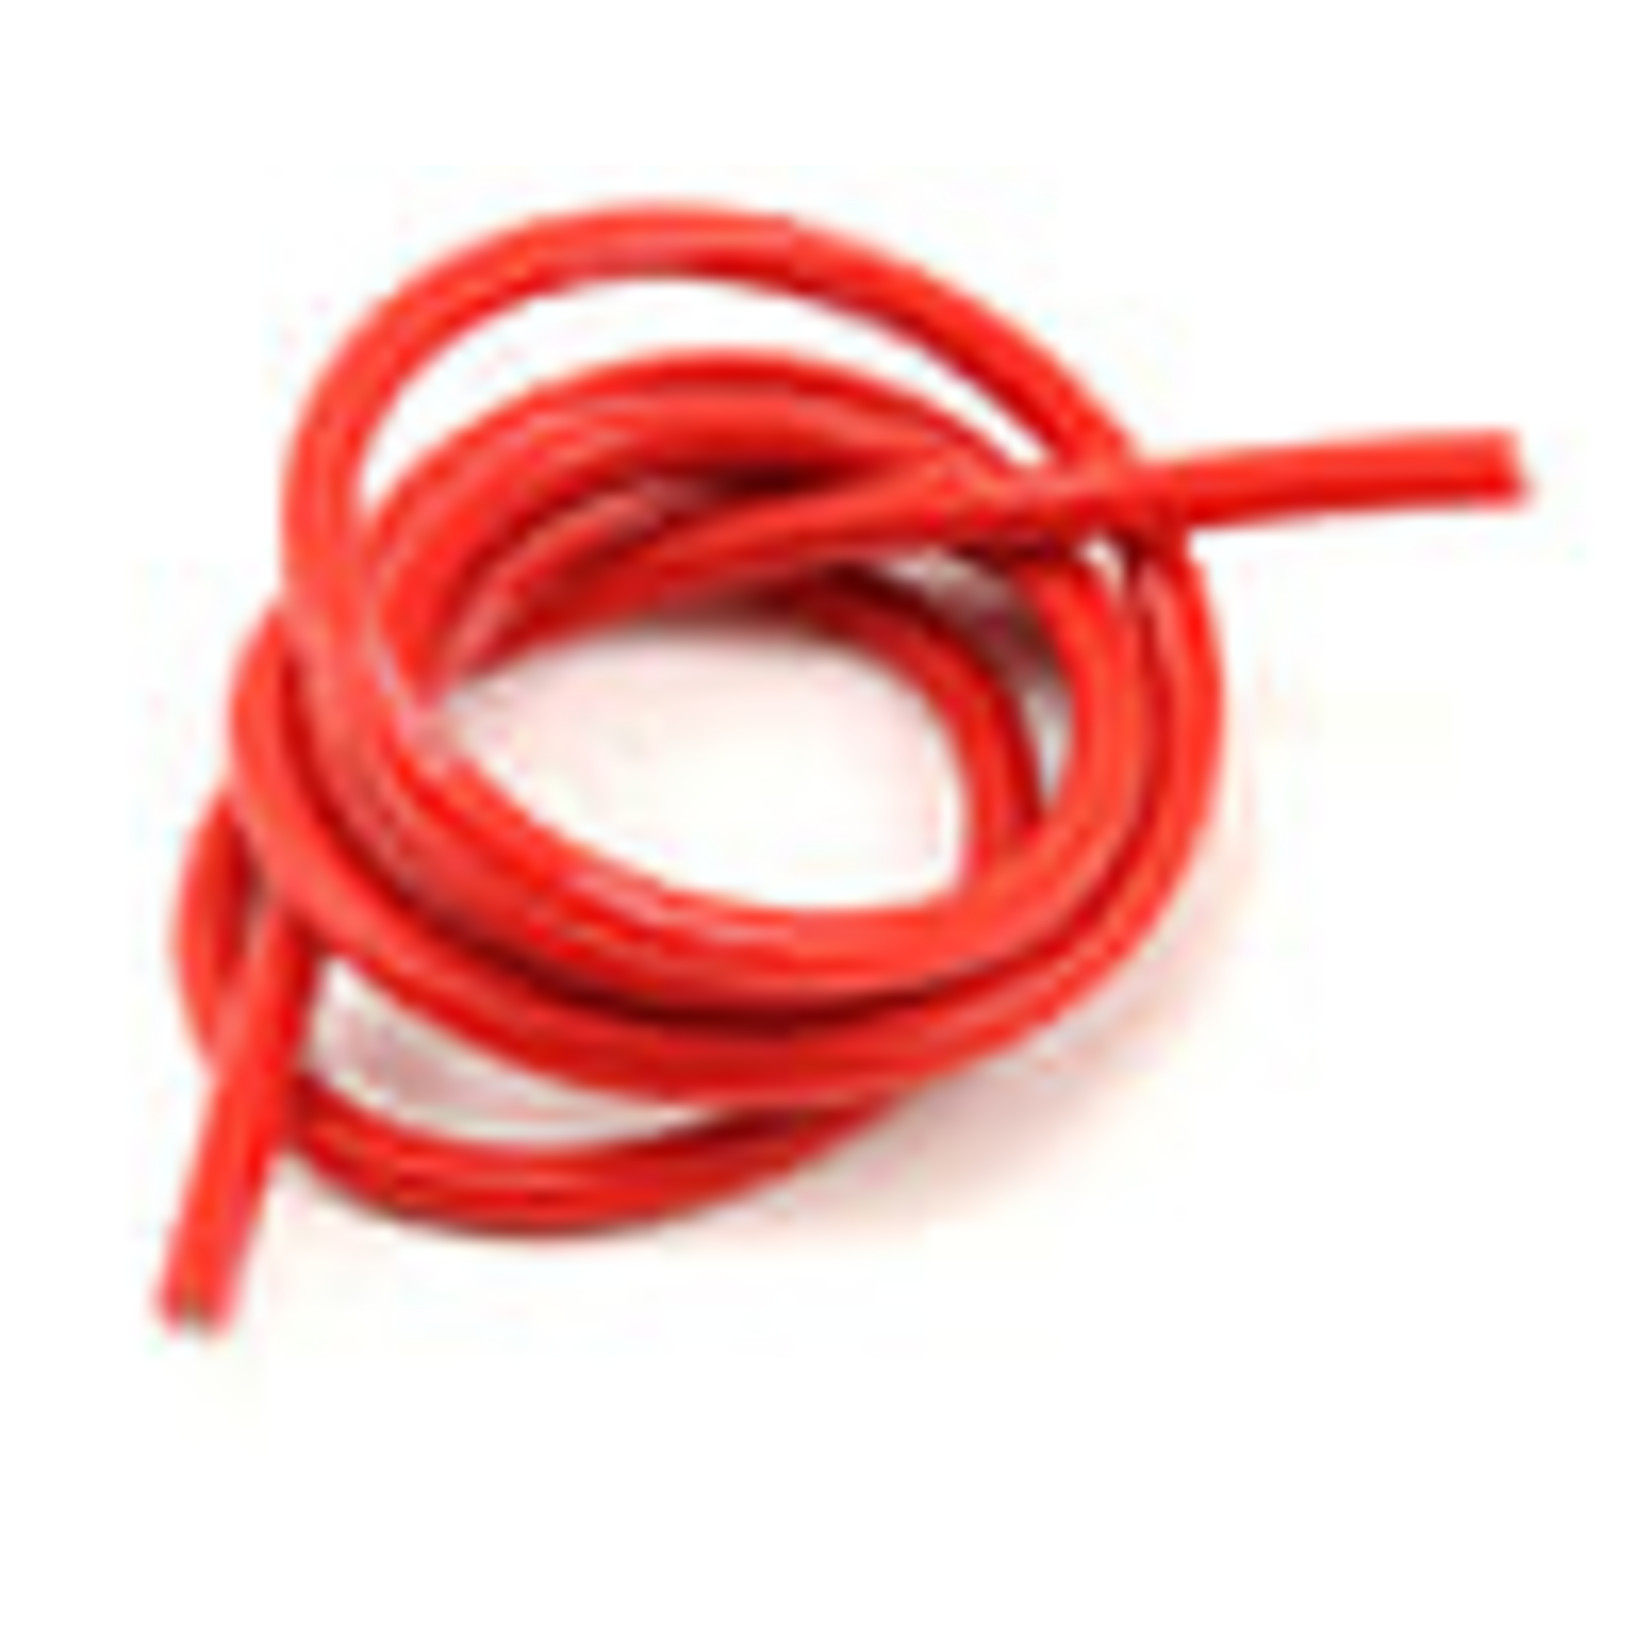 Protek R/C PTK-5610 ProTek RC 10awg Red Silicone Hookup Wire (1 Meter)